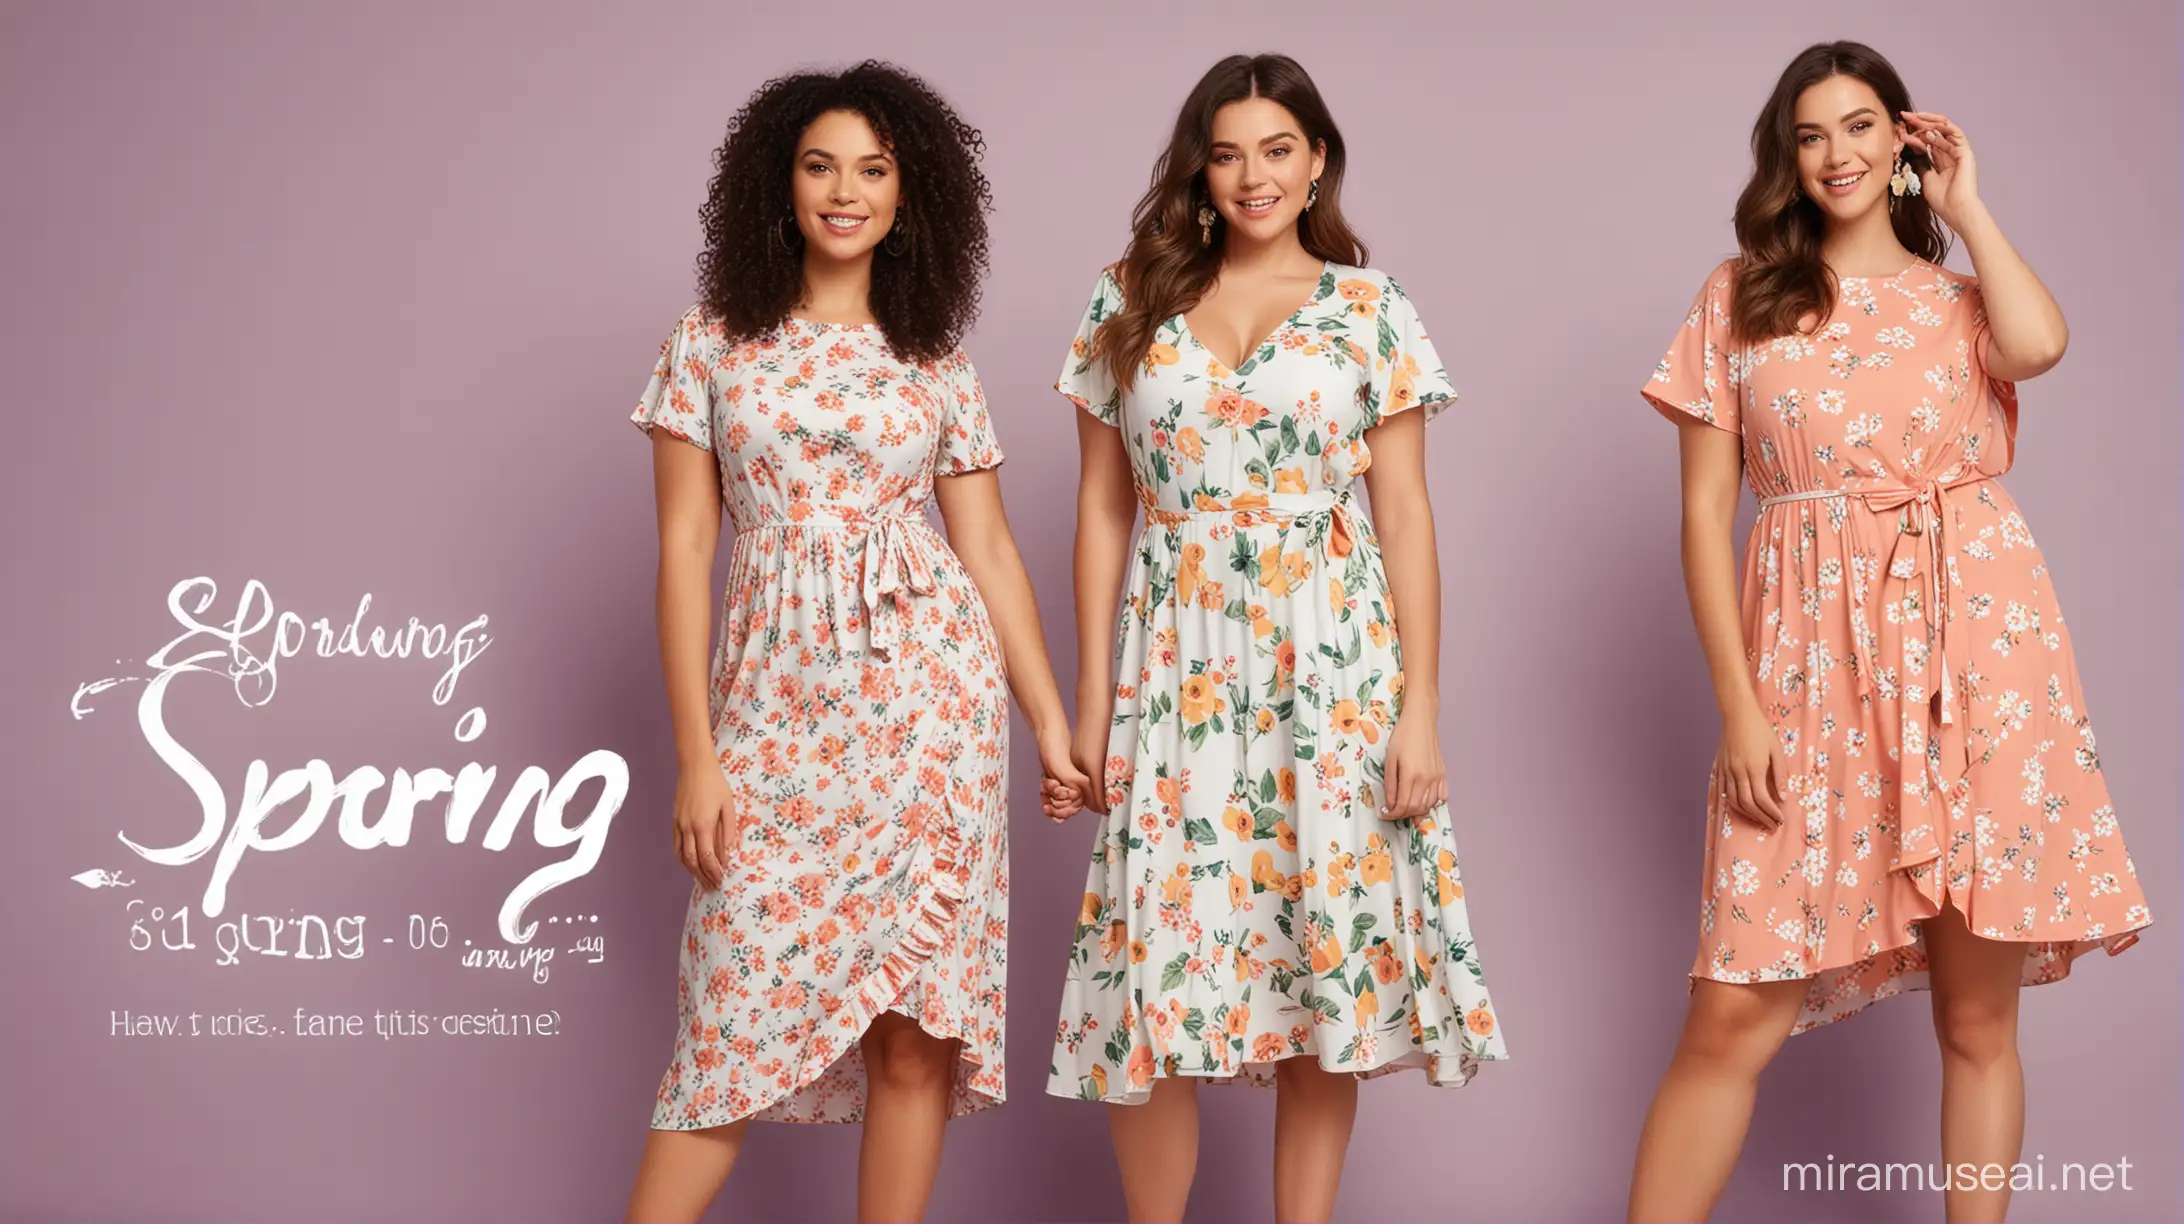 Curvy Women in Short Sleeve Dresses Captivating Springtime Fashion Banner